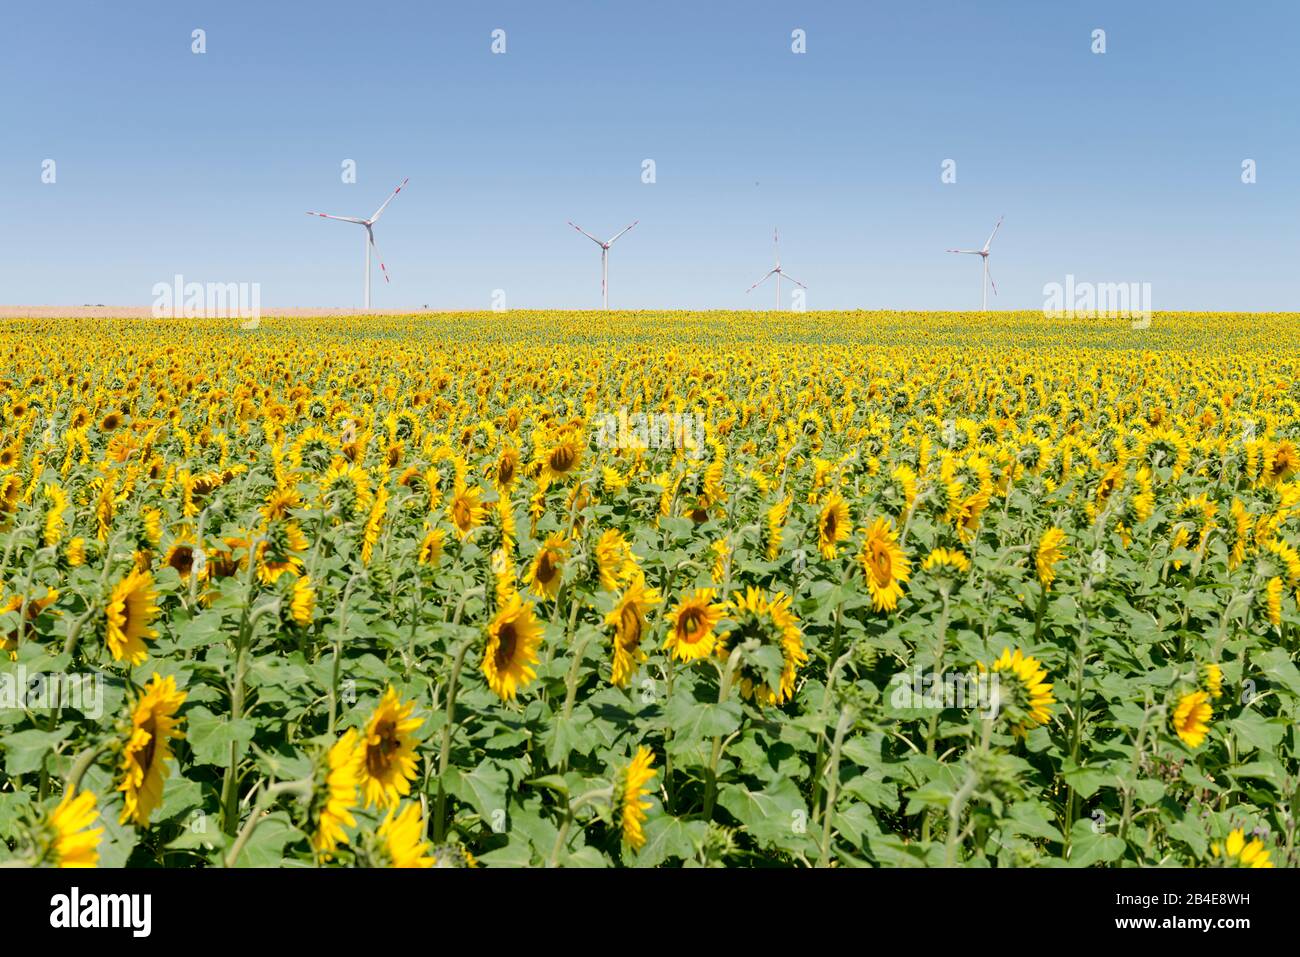 Windräder im Sonnenblumenfeld unter blauem Himmel Stock Photo